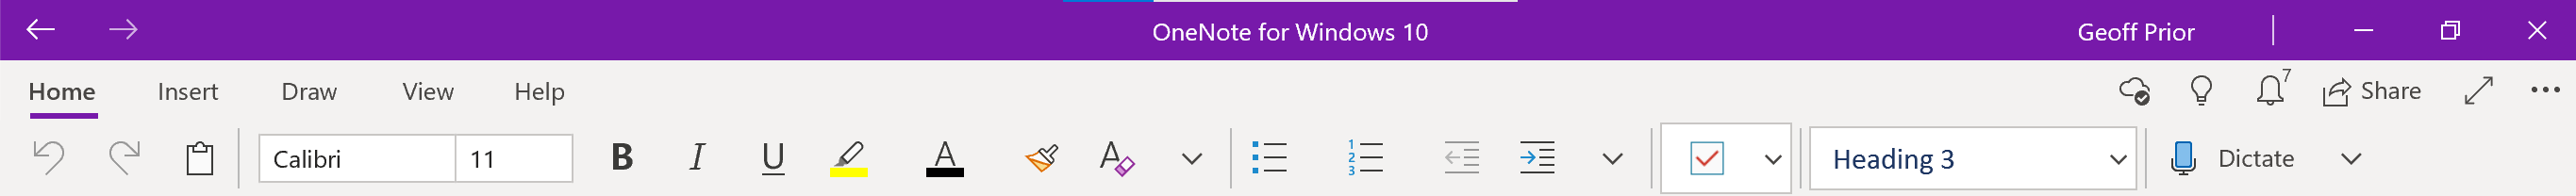 Microsoft OneNote Windows 10 - Simplified Ribbon